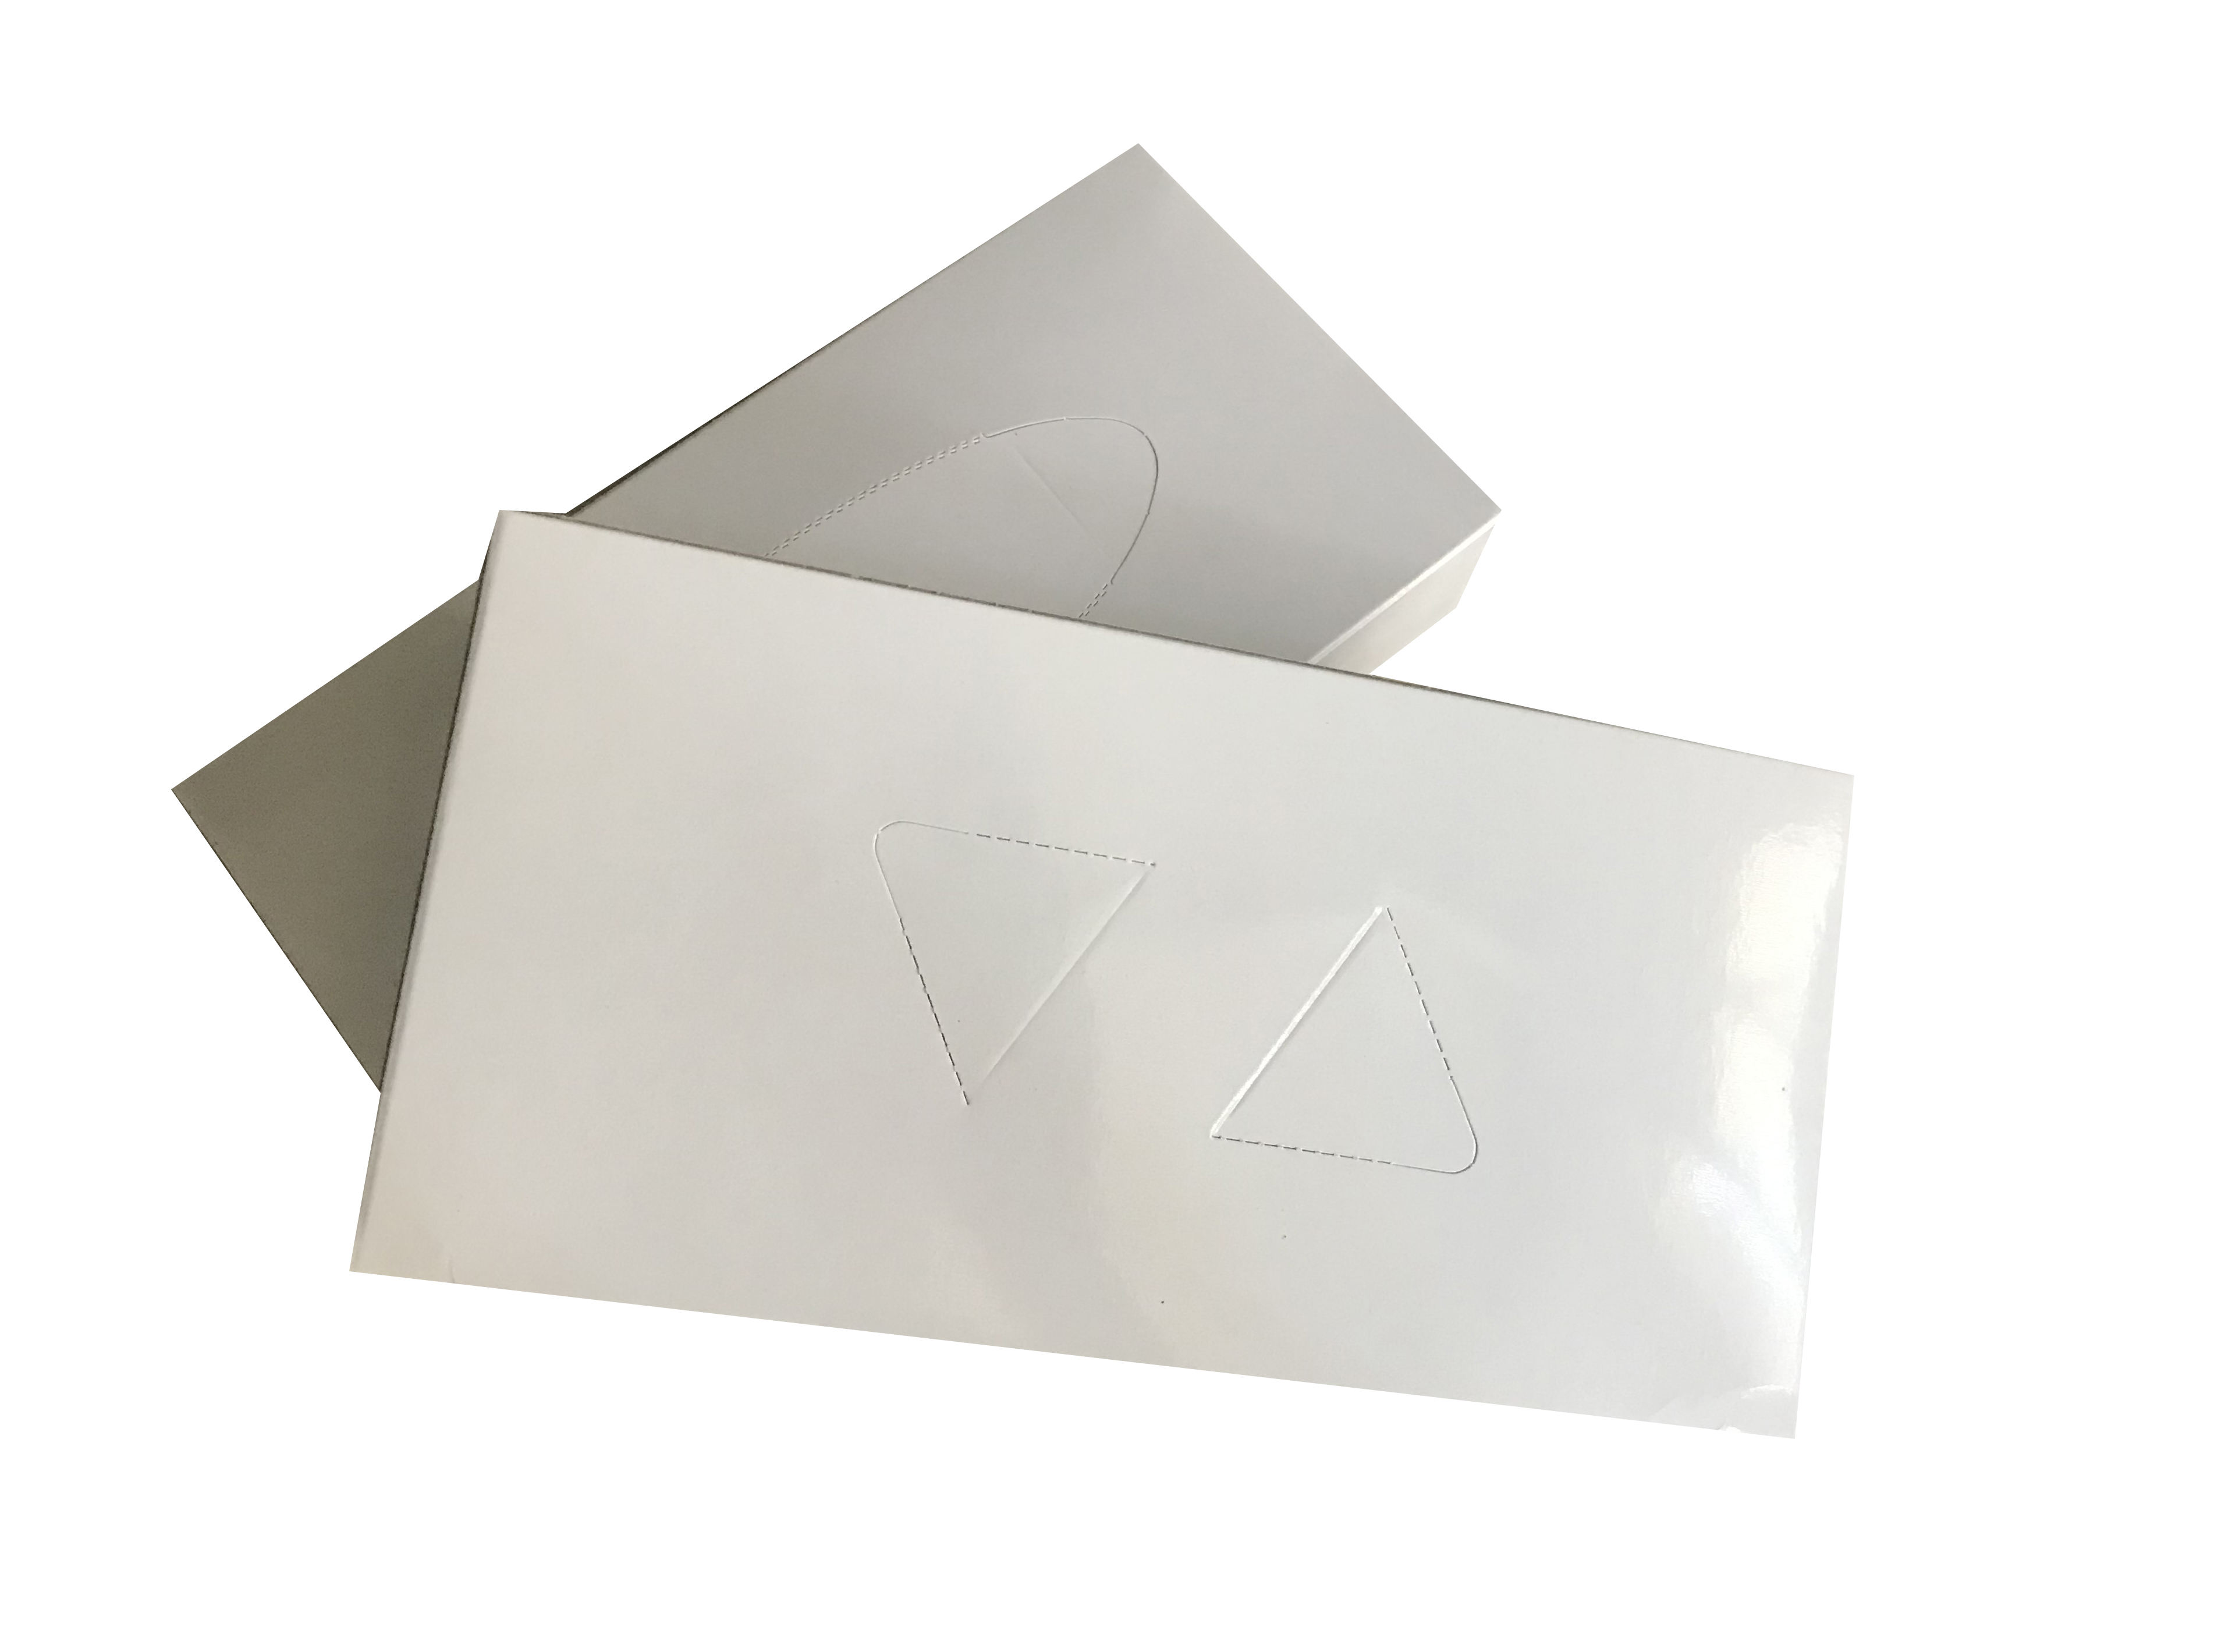 Factory Supply Box 200 Sheets Silk Soft Facial Tissue 3 Ply